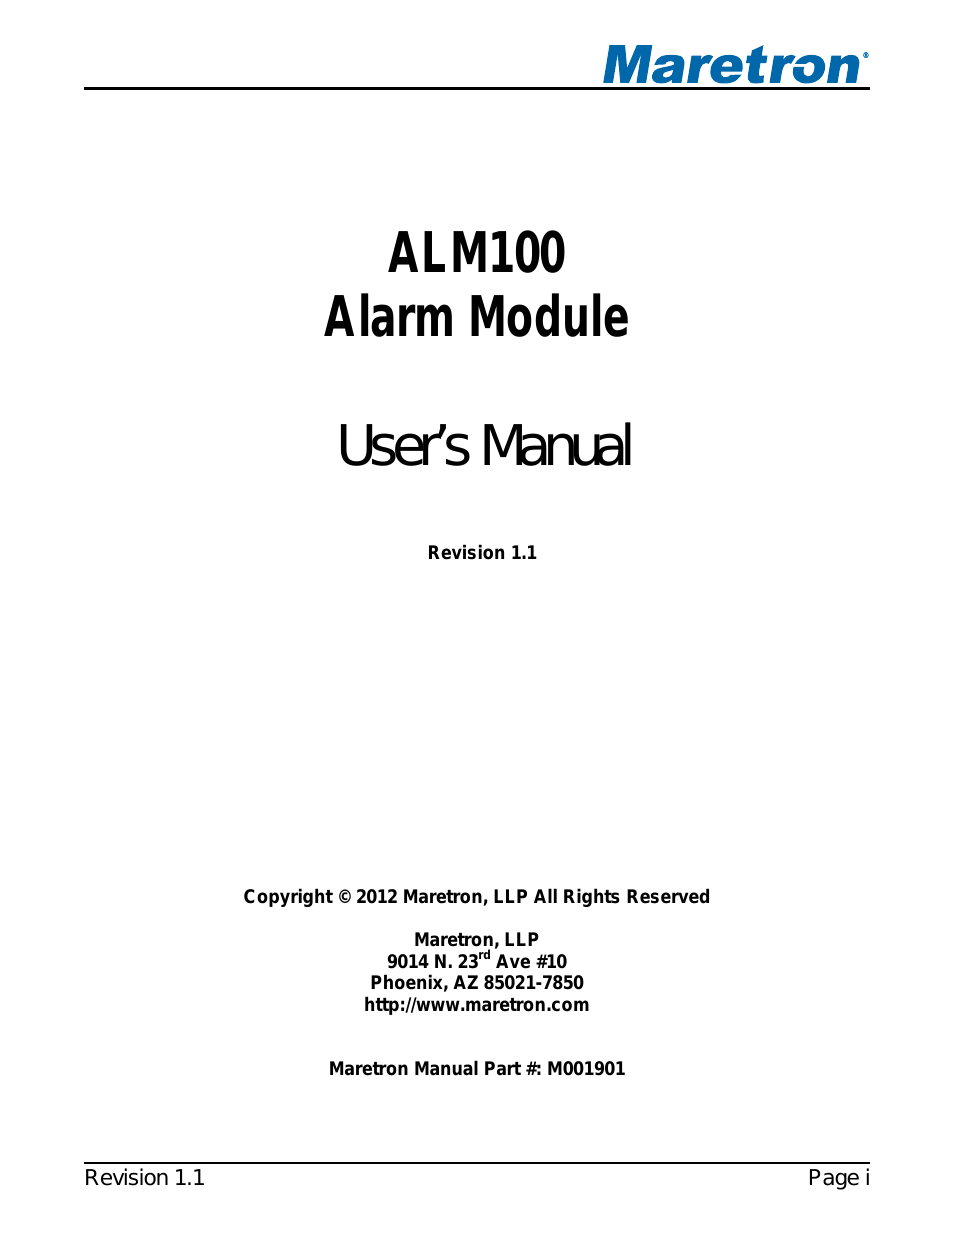 Alarm Module ALM100